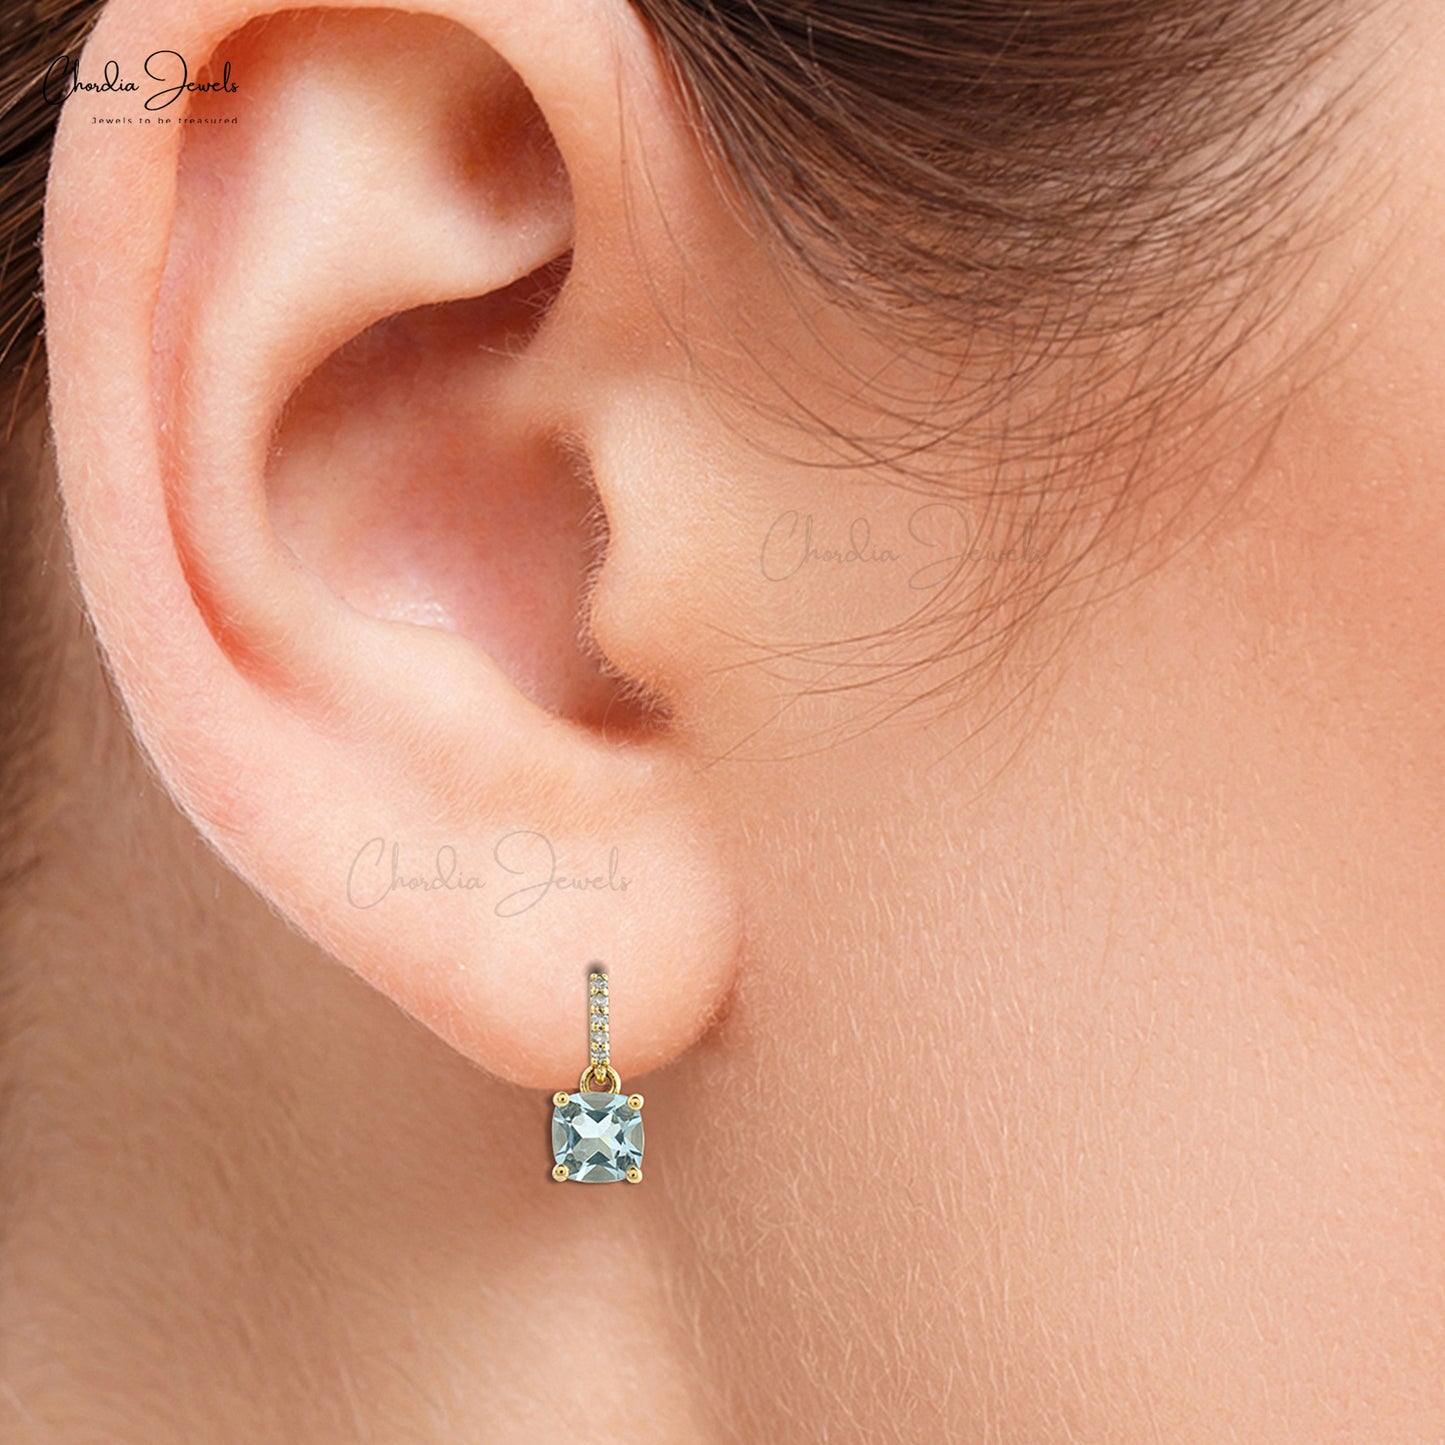 Natural Aquamarine Dangling Earrings 6mm Cushion Cut Gemstone Earrings 14k Solid Yellow Gold Earrings For Women's